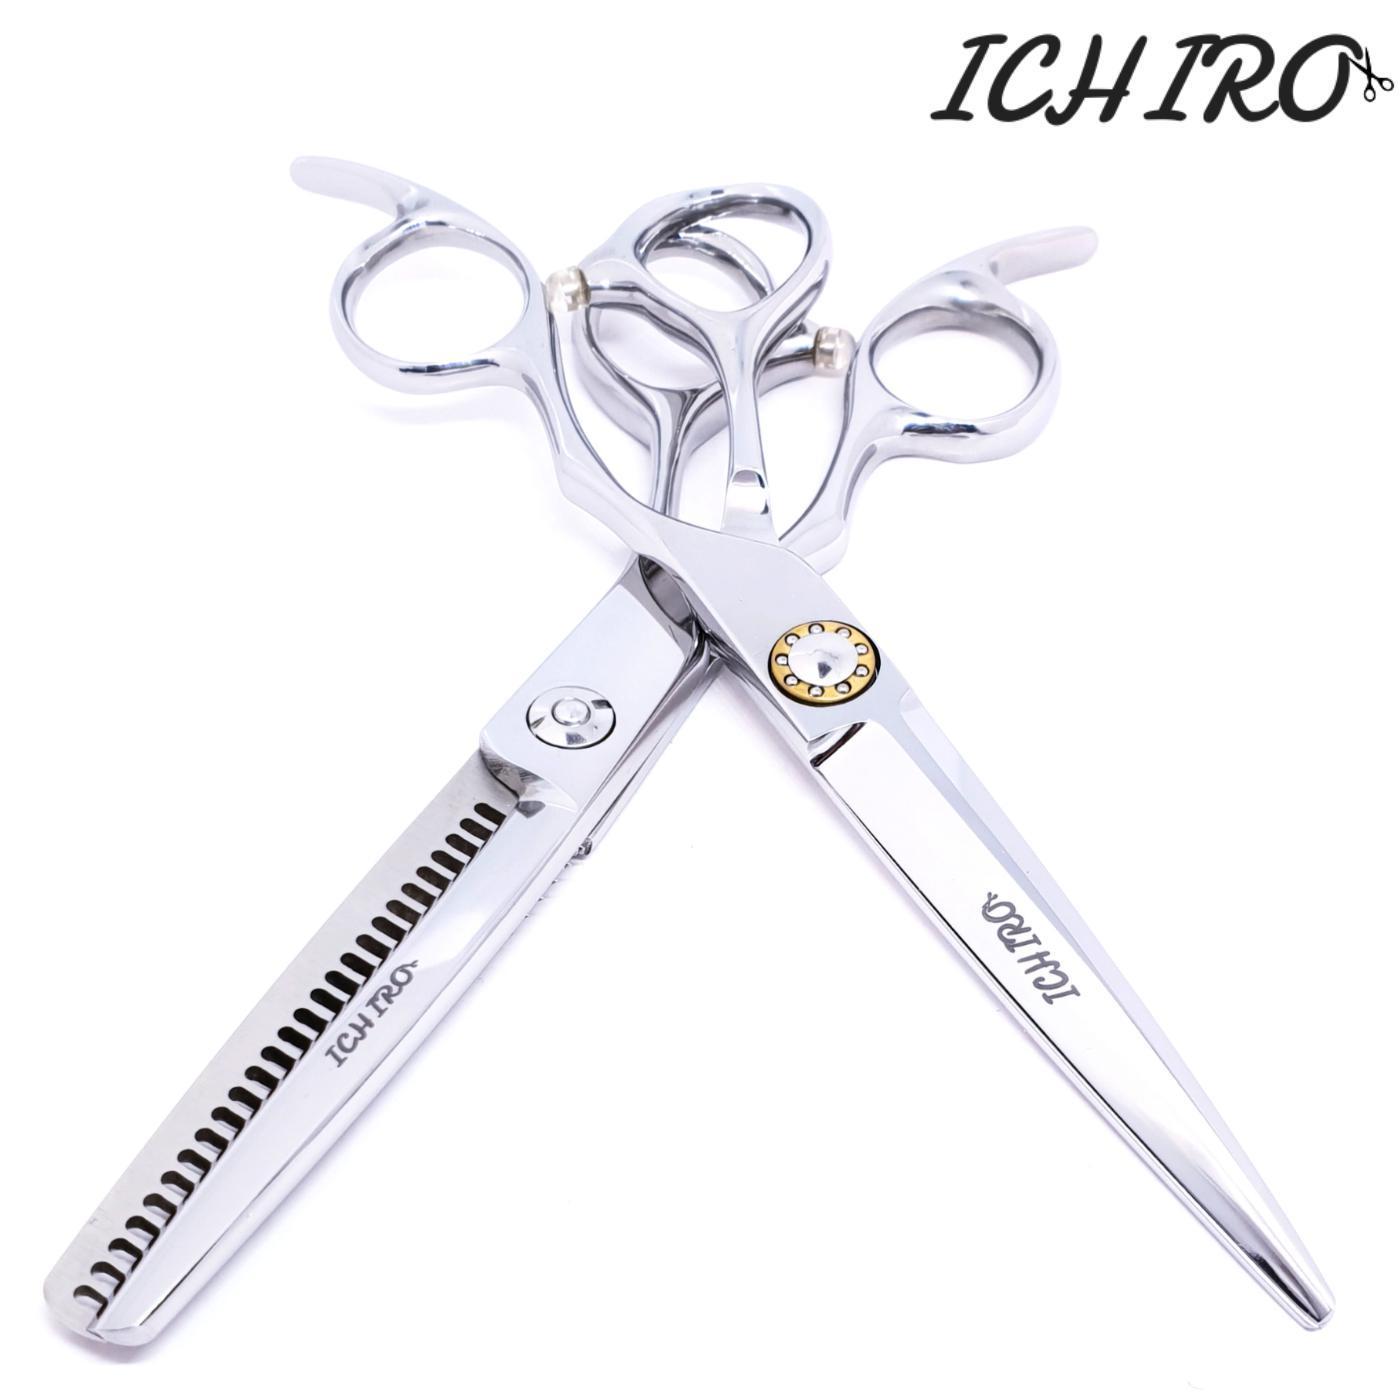 The Ichiro Offset Hair Scissor Set